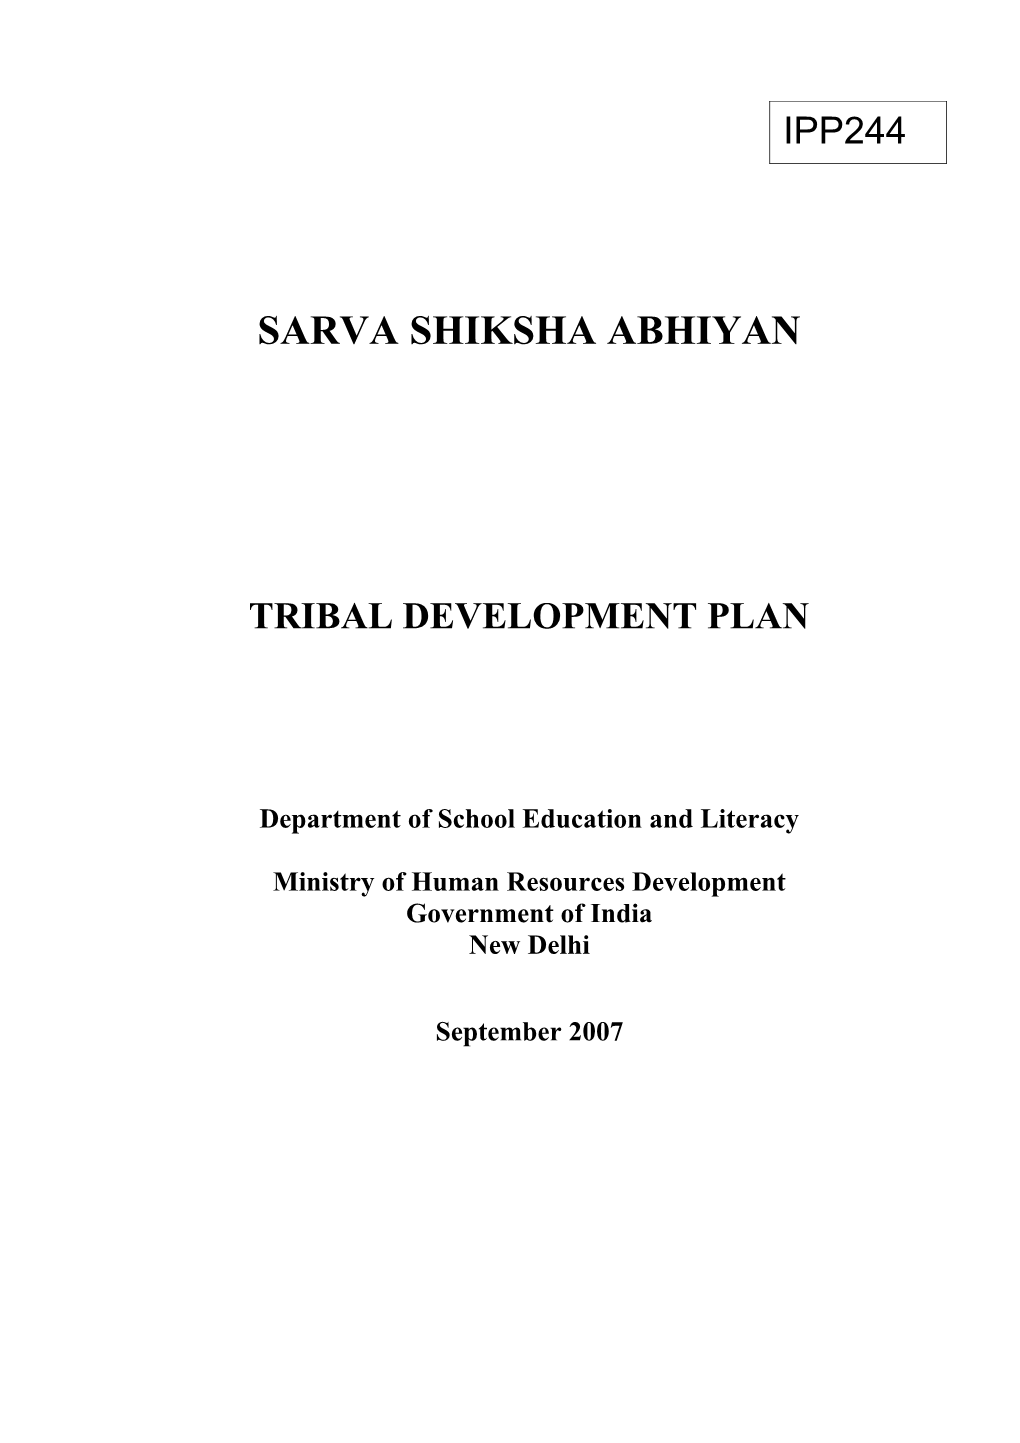 Tribal Development Plan